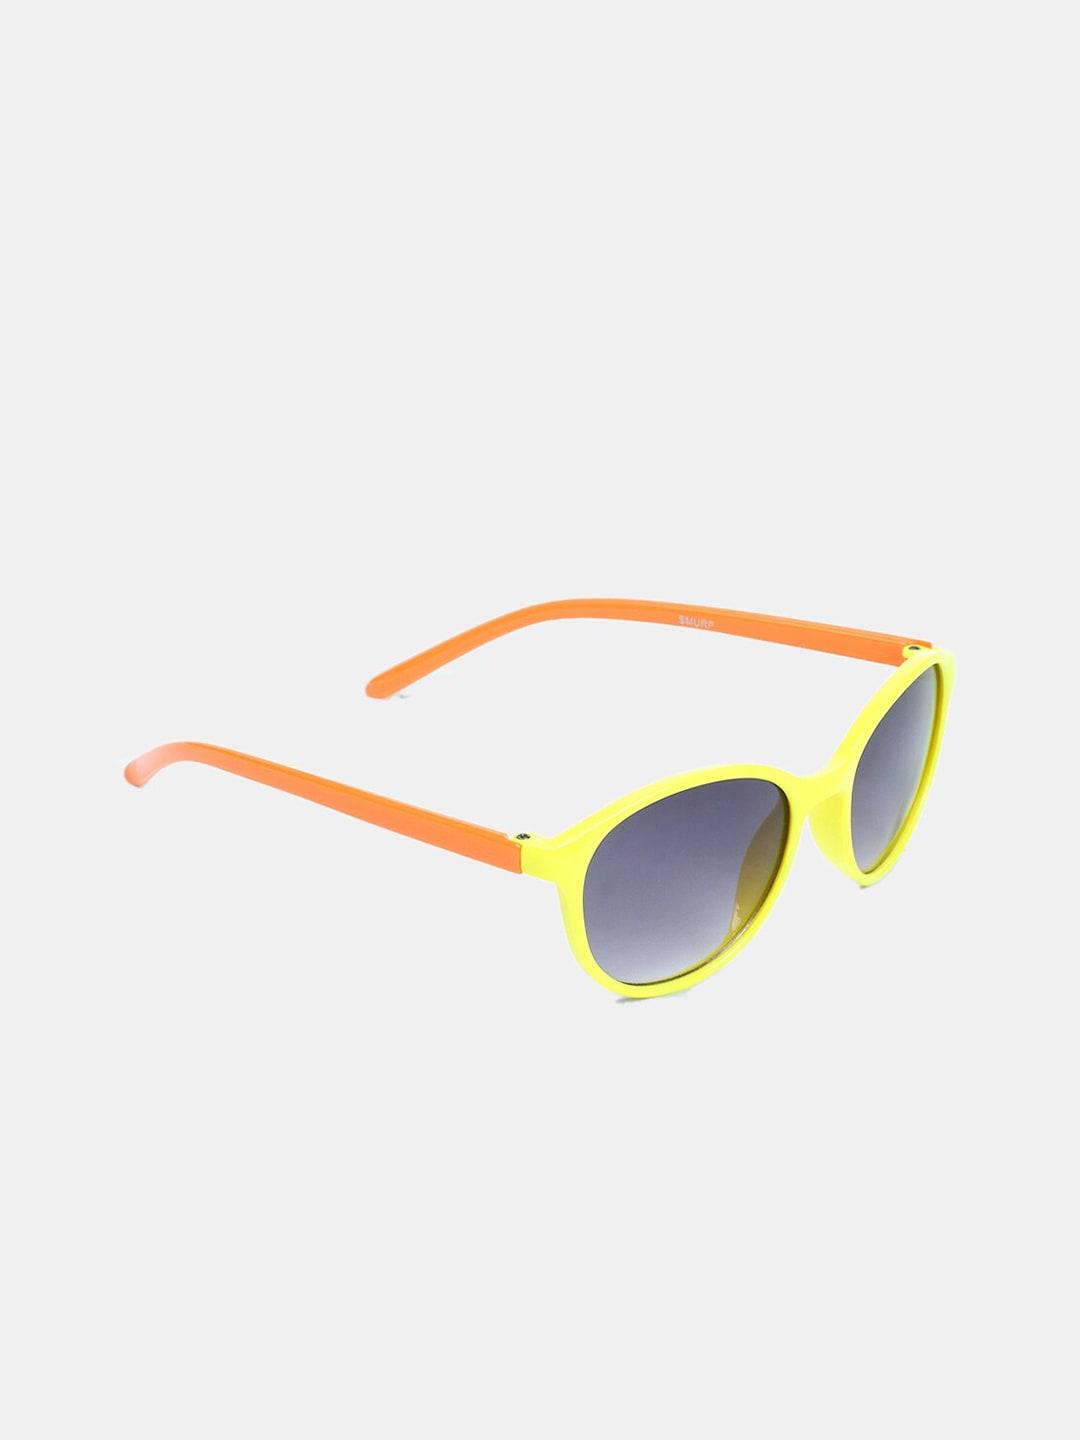 DukieKooky Girls Wayfarer Sunglasses with UV Protected Lens DKSG369